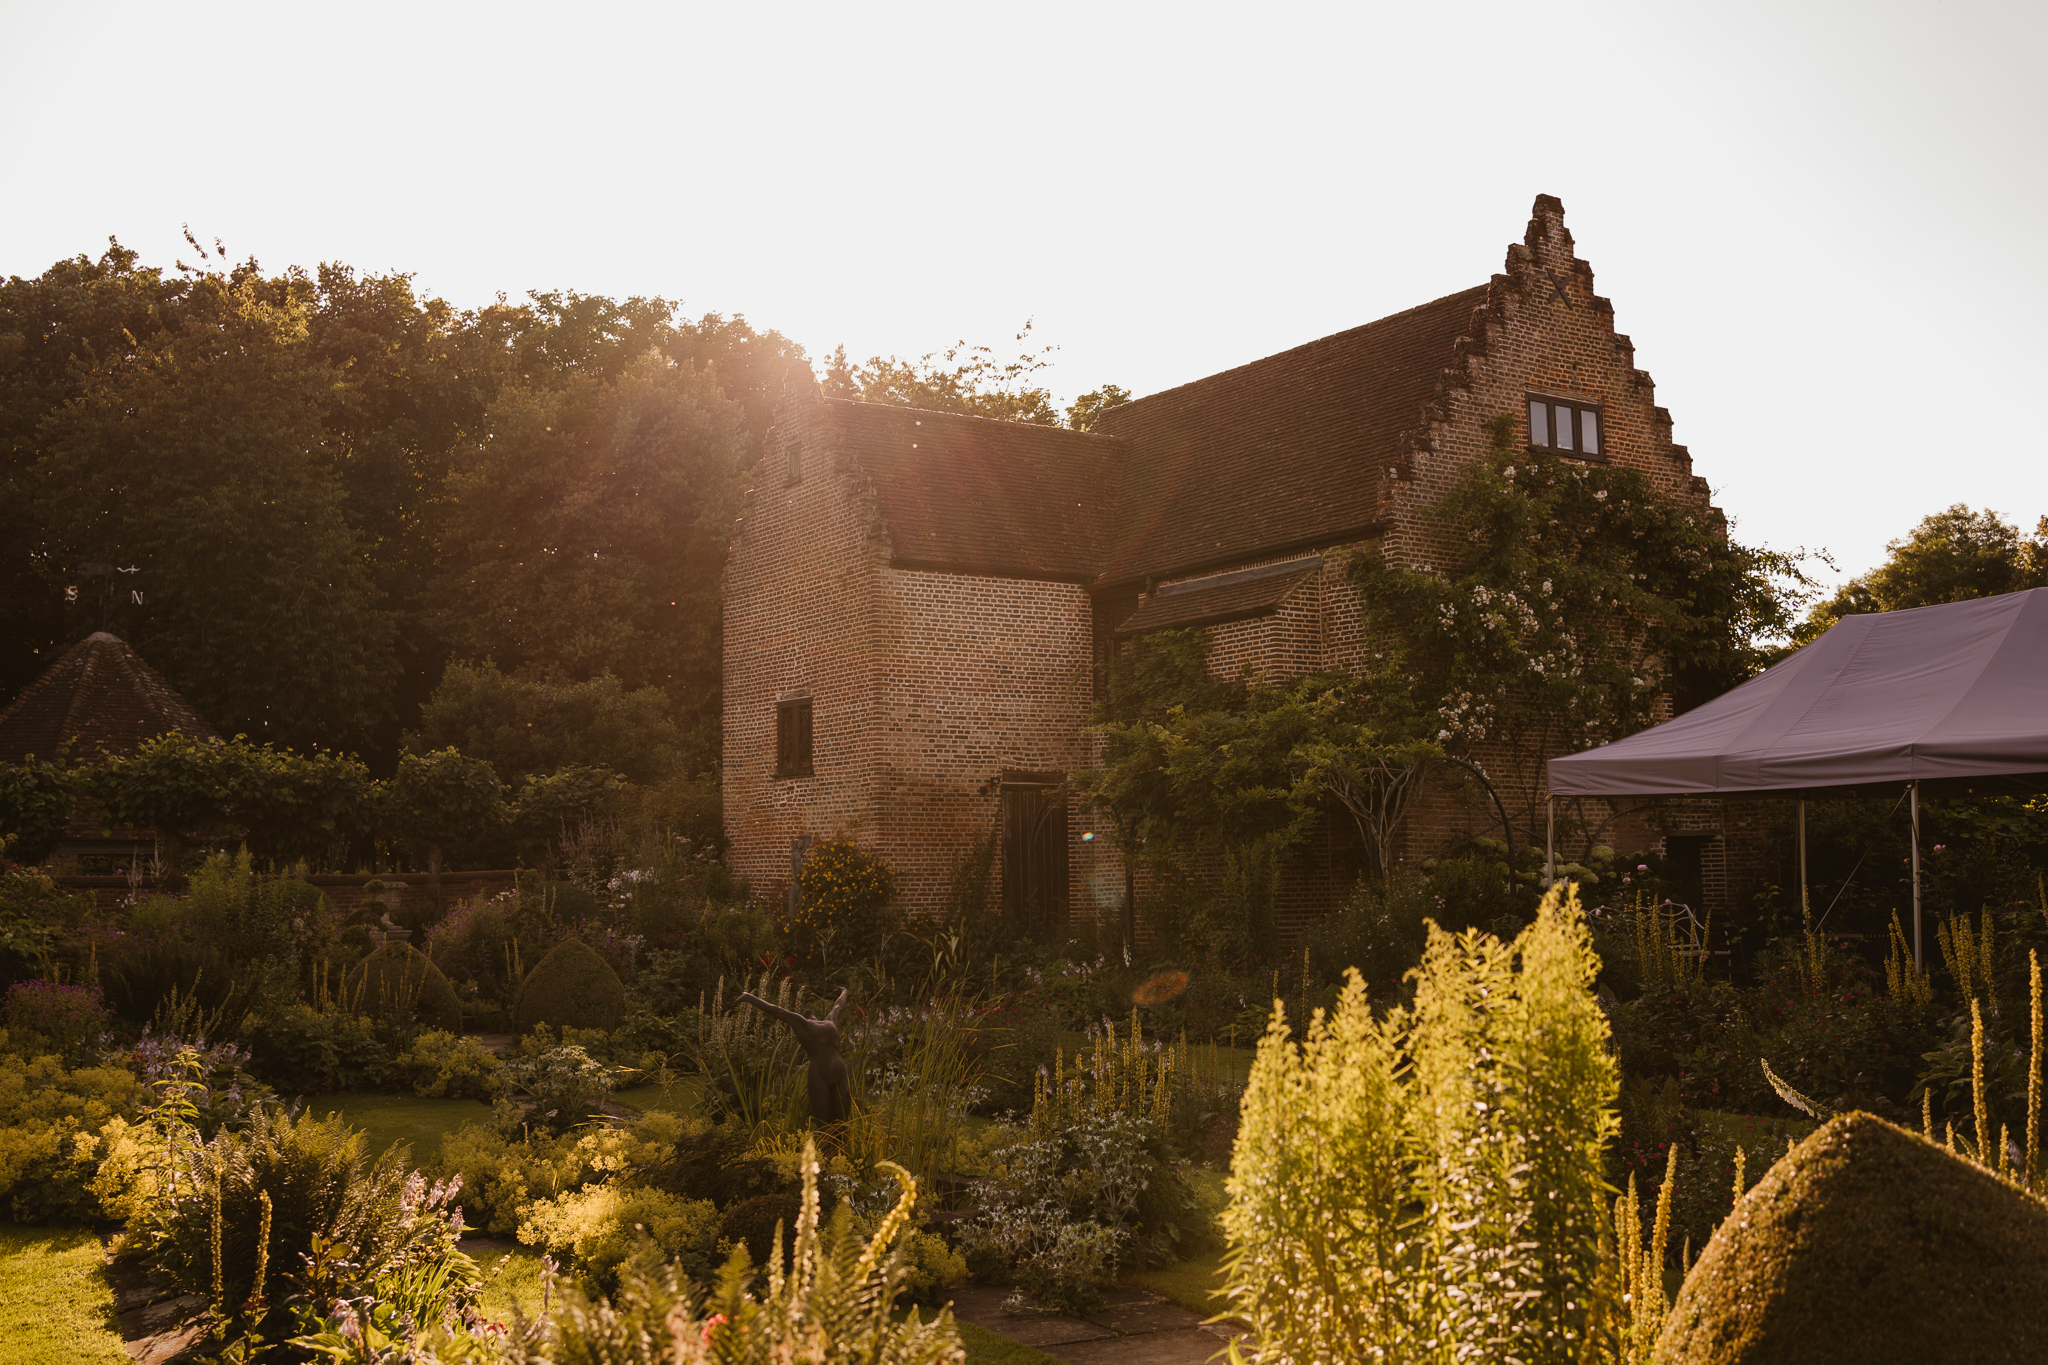 The beautiful house in sunshine - Chenies Manor House, Buckinghamshire